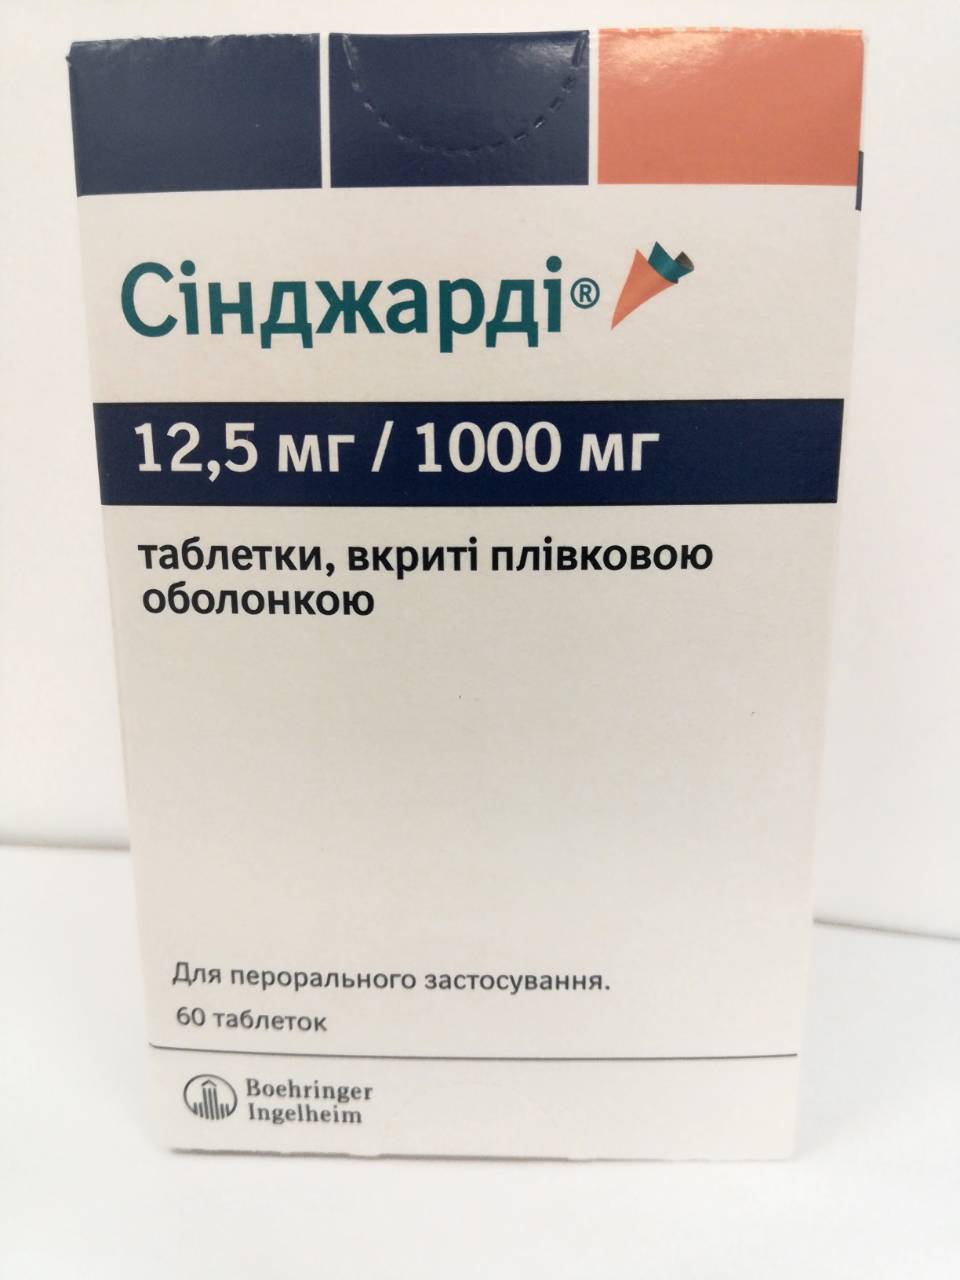 7124 КАЗАНО® - Metformin and alogliptin